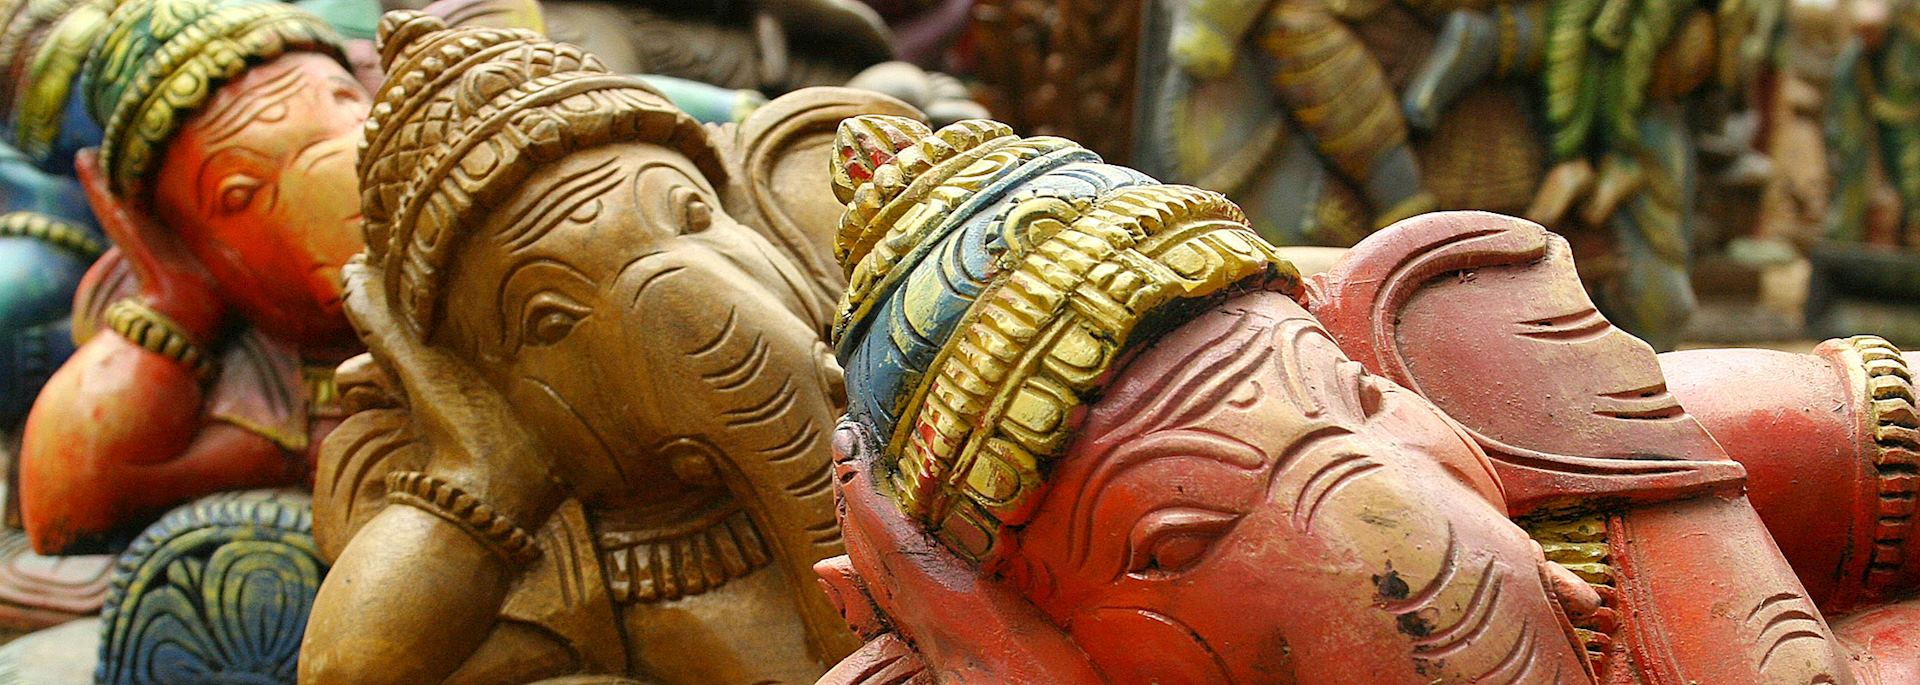 Hindu elephants in Chennai